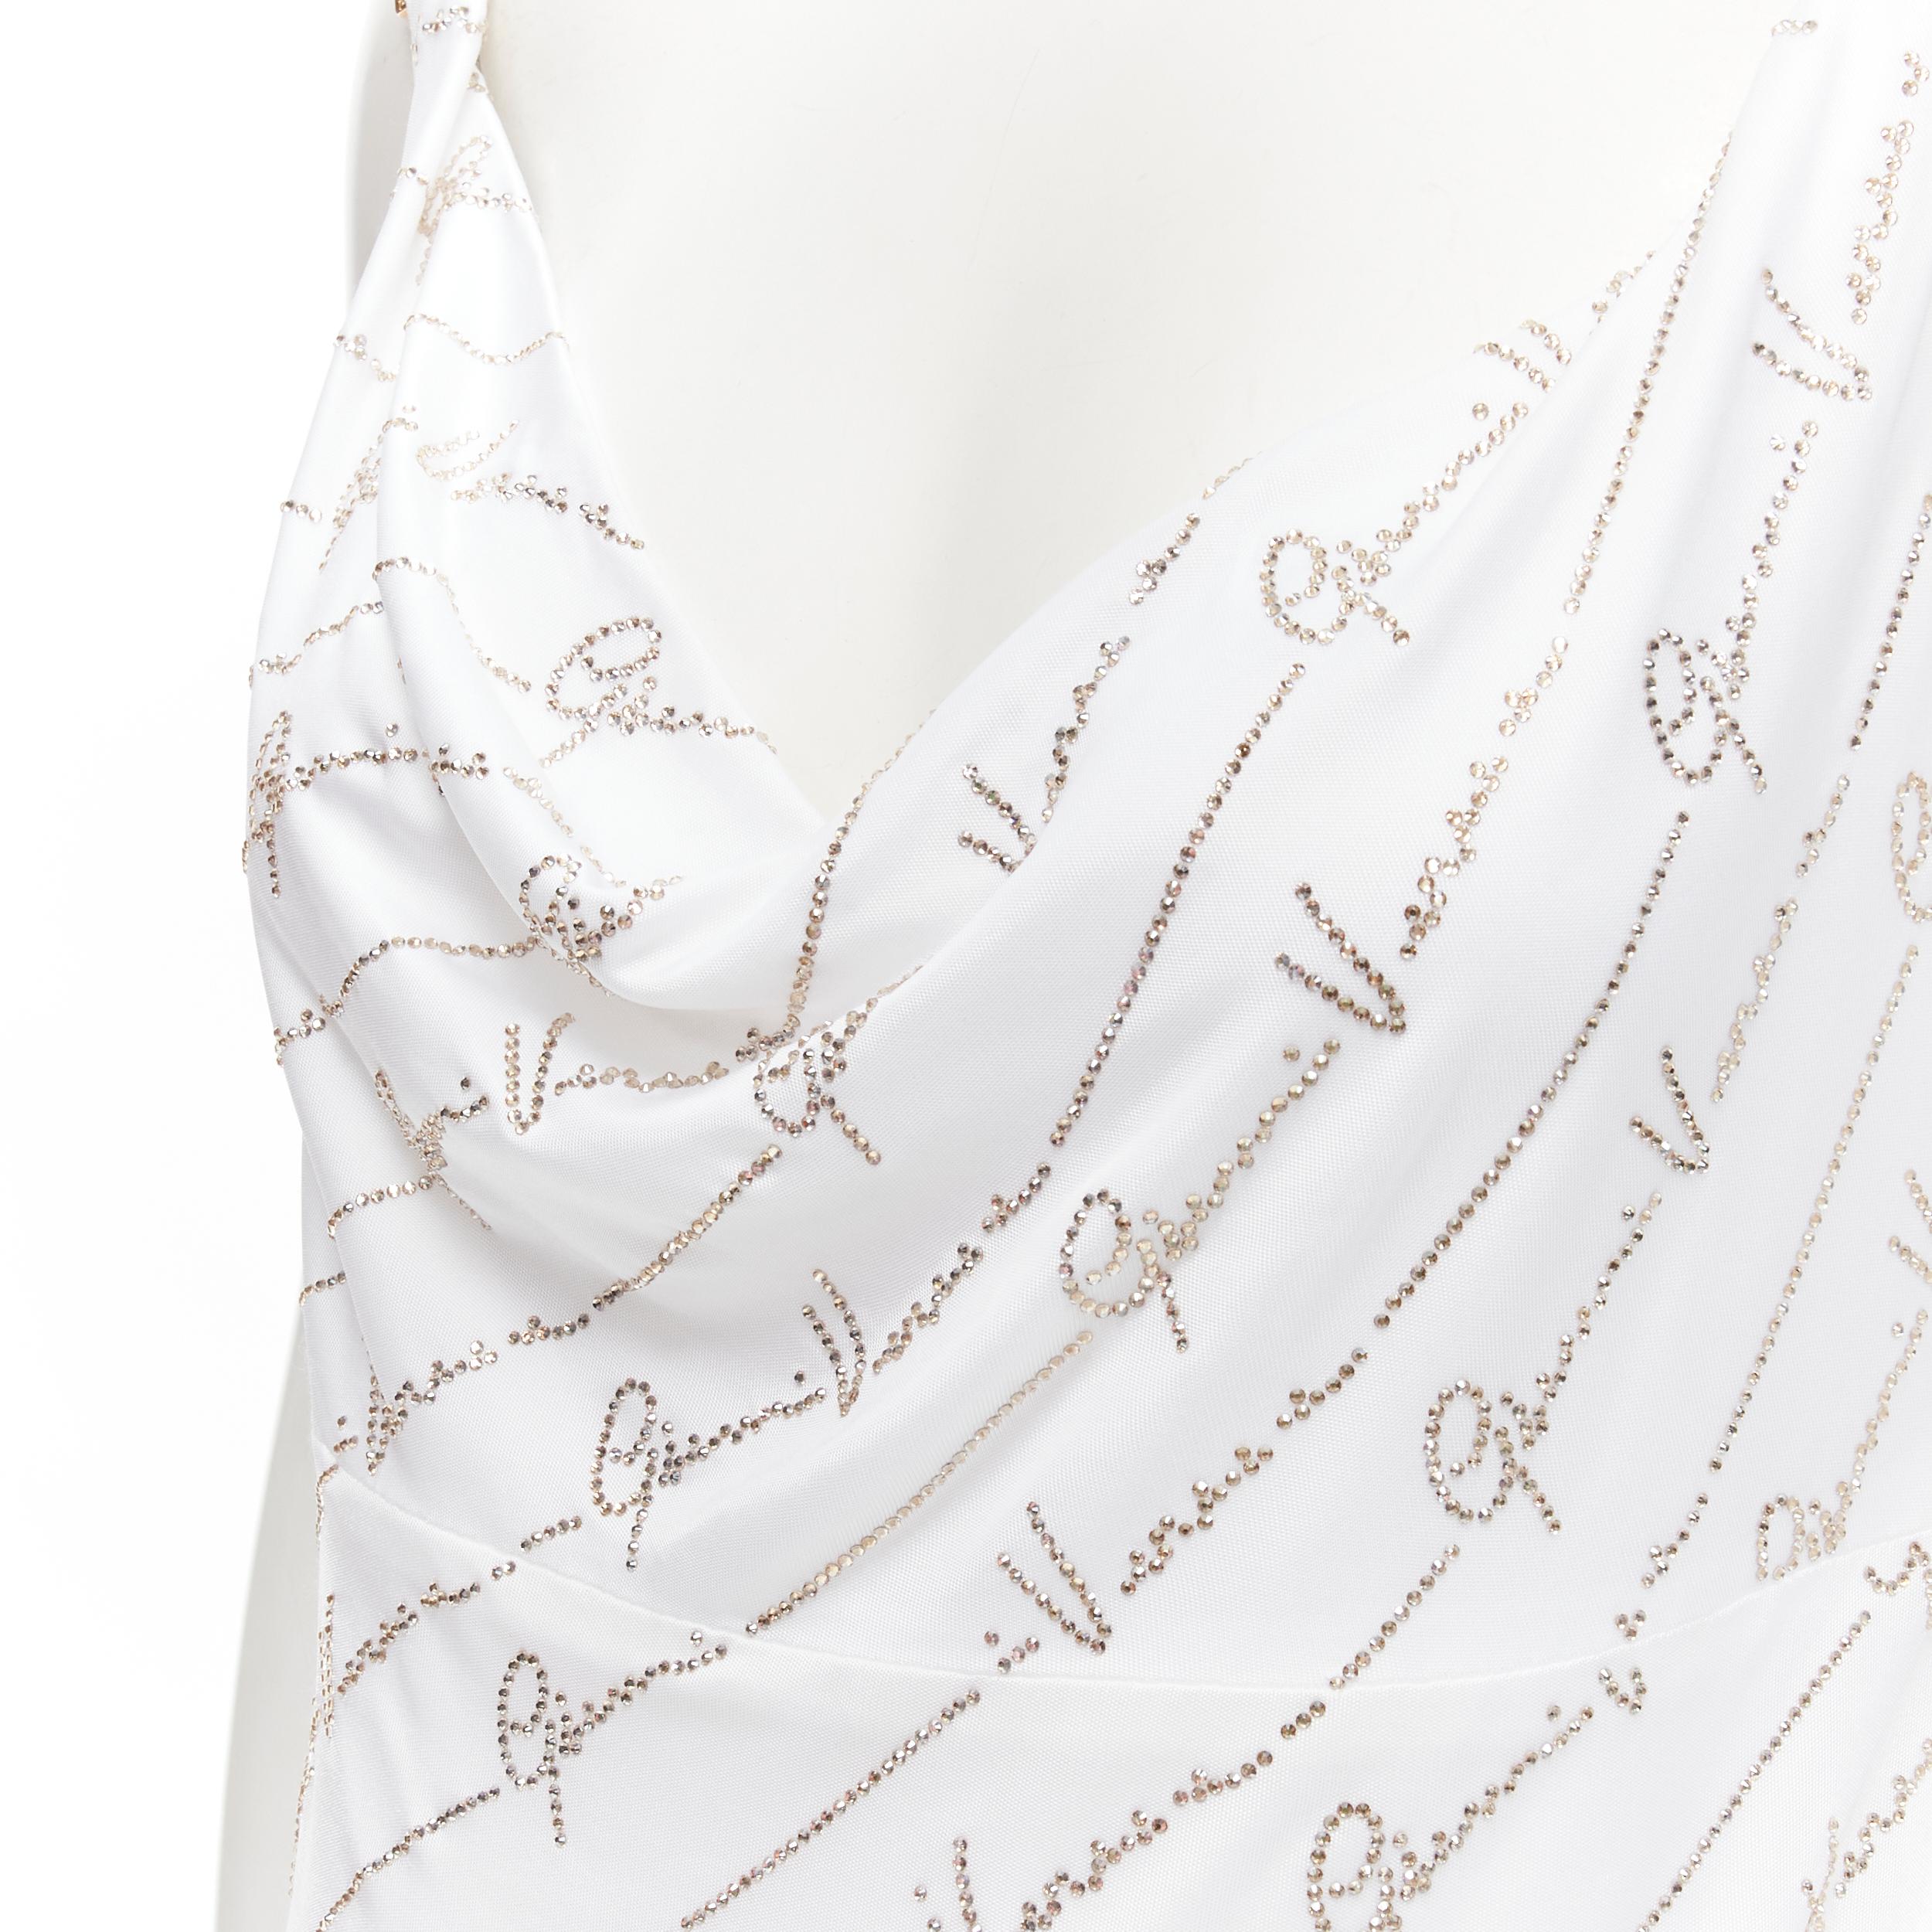 Versace - Robe Medusa incrustée de cristaux blancs incrustés, signature Gianni, taille IT 44 L, état neuf en vente 2